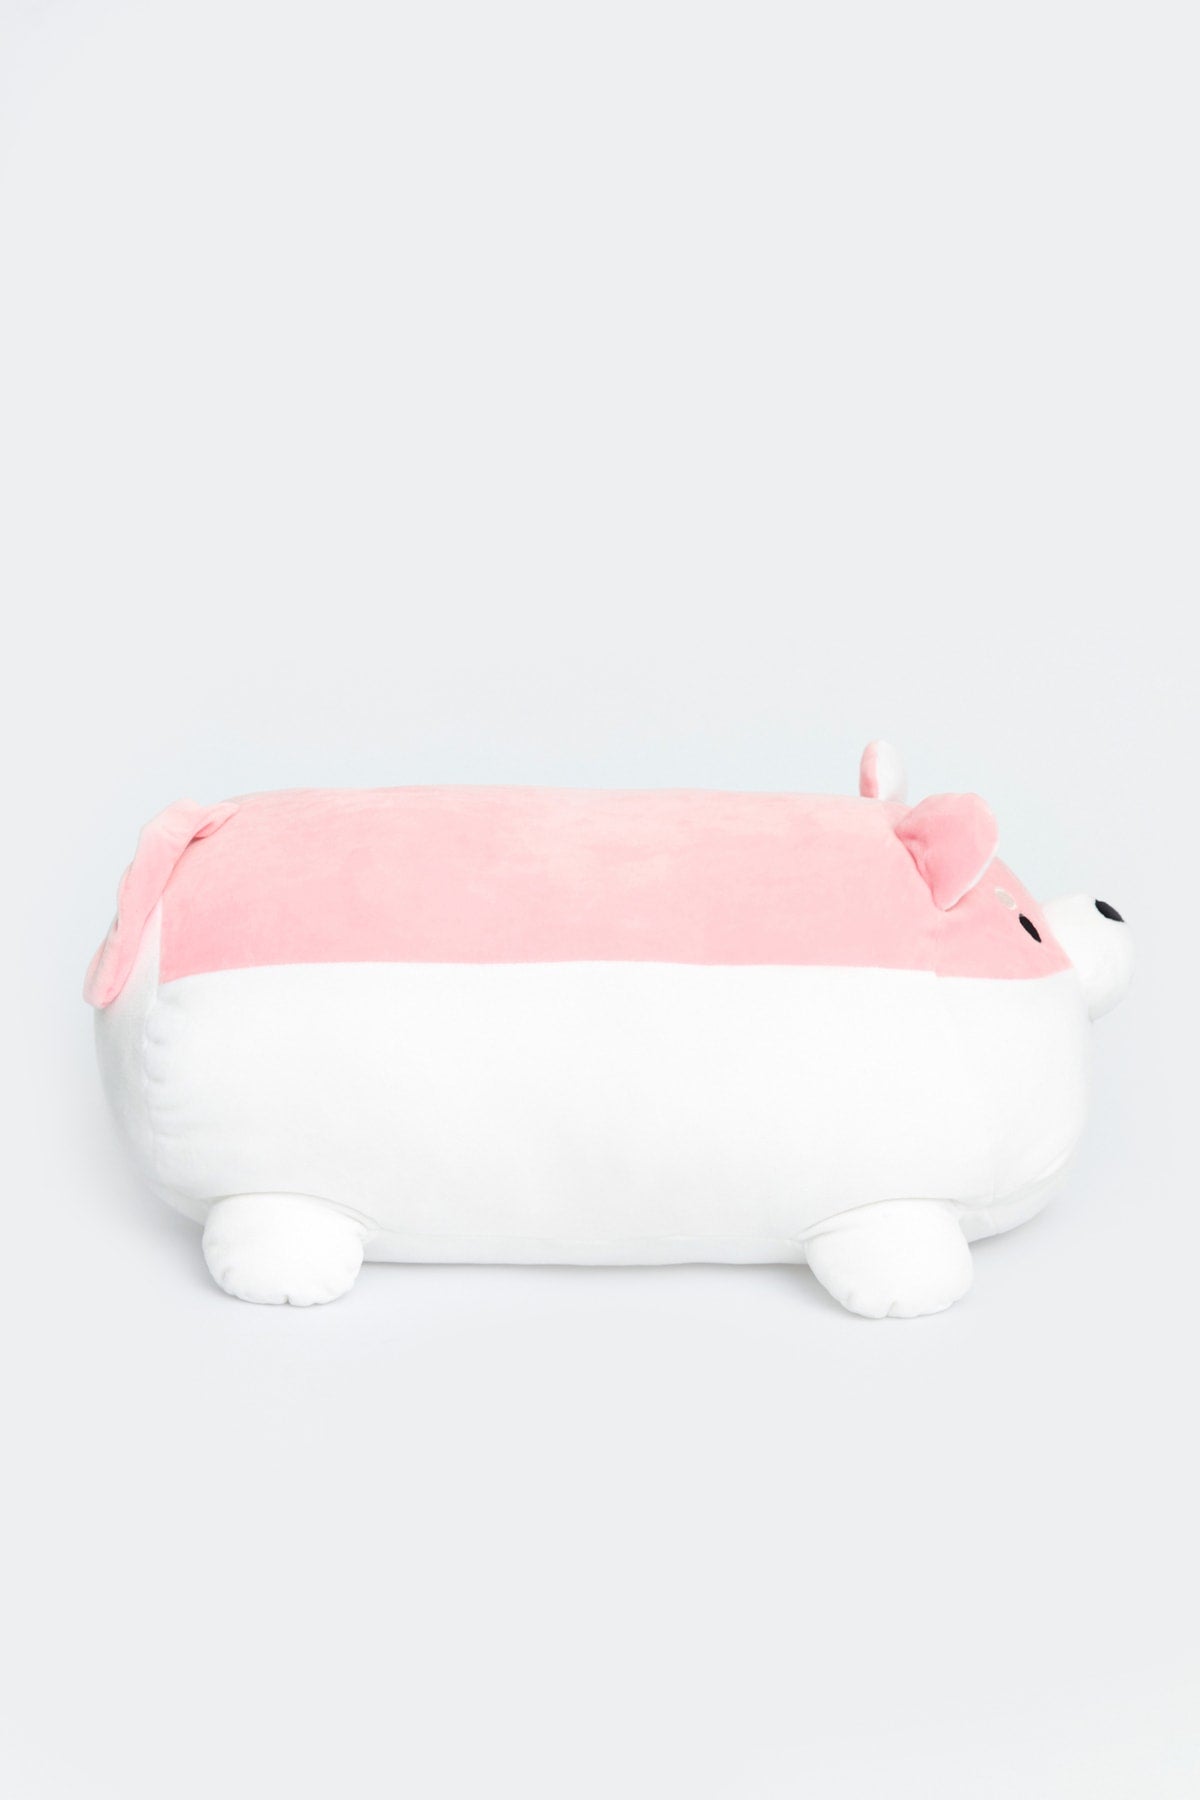 Spandex Cylinder Dog Pillow 50 Cm Pink